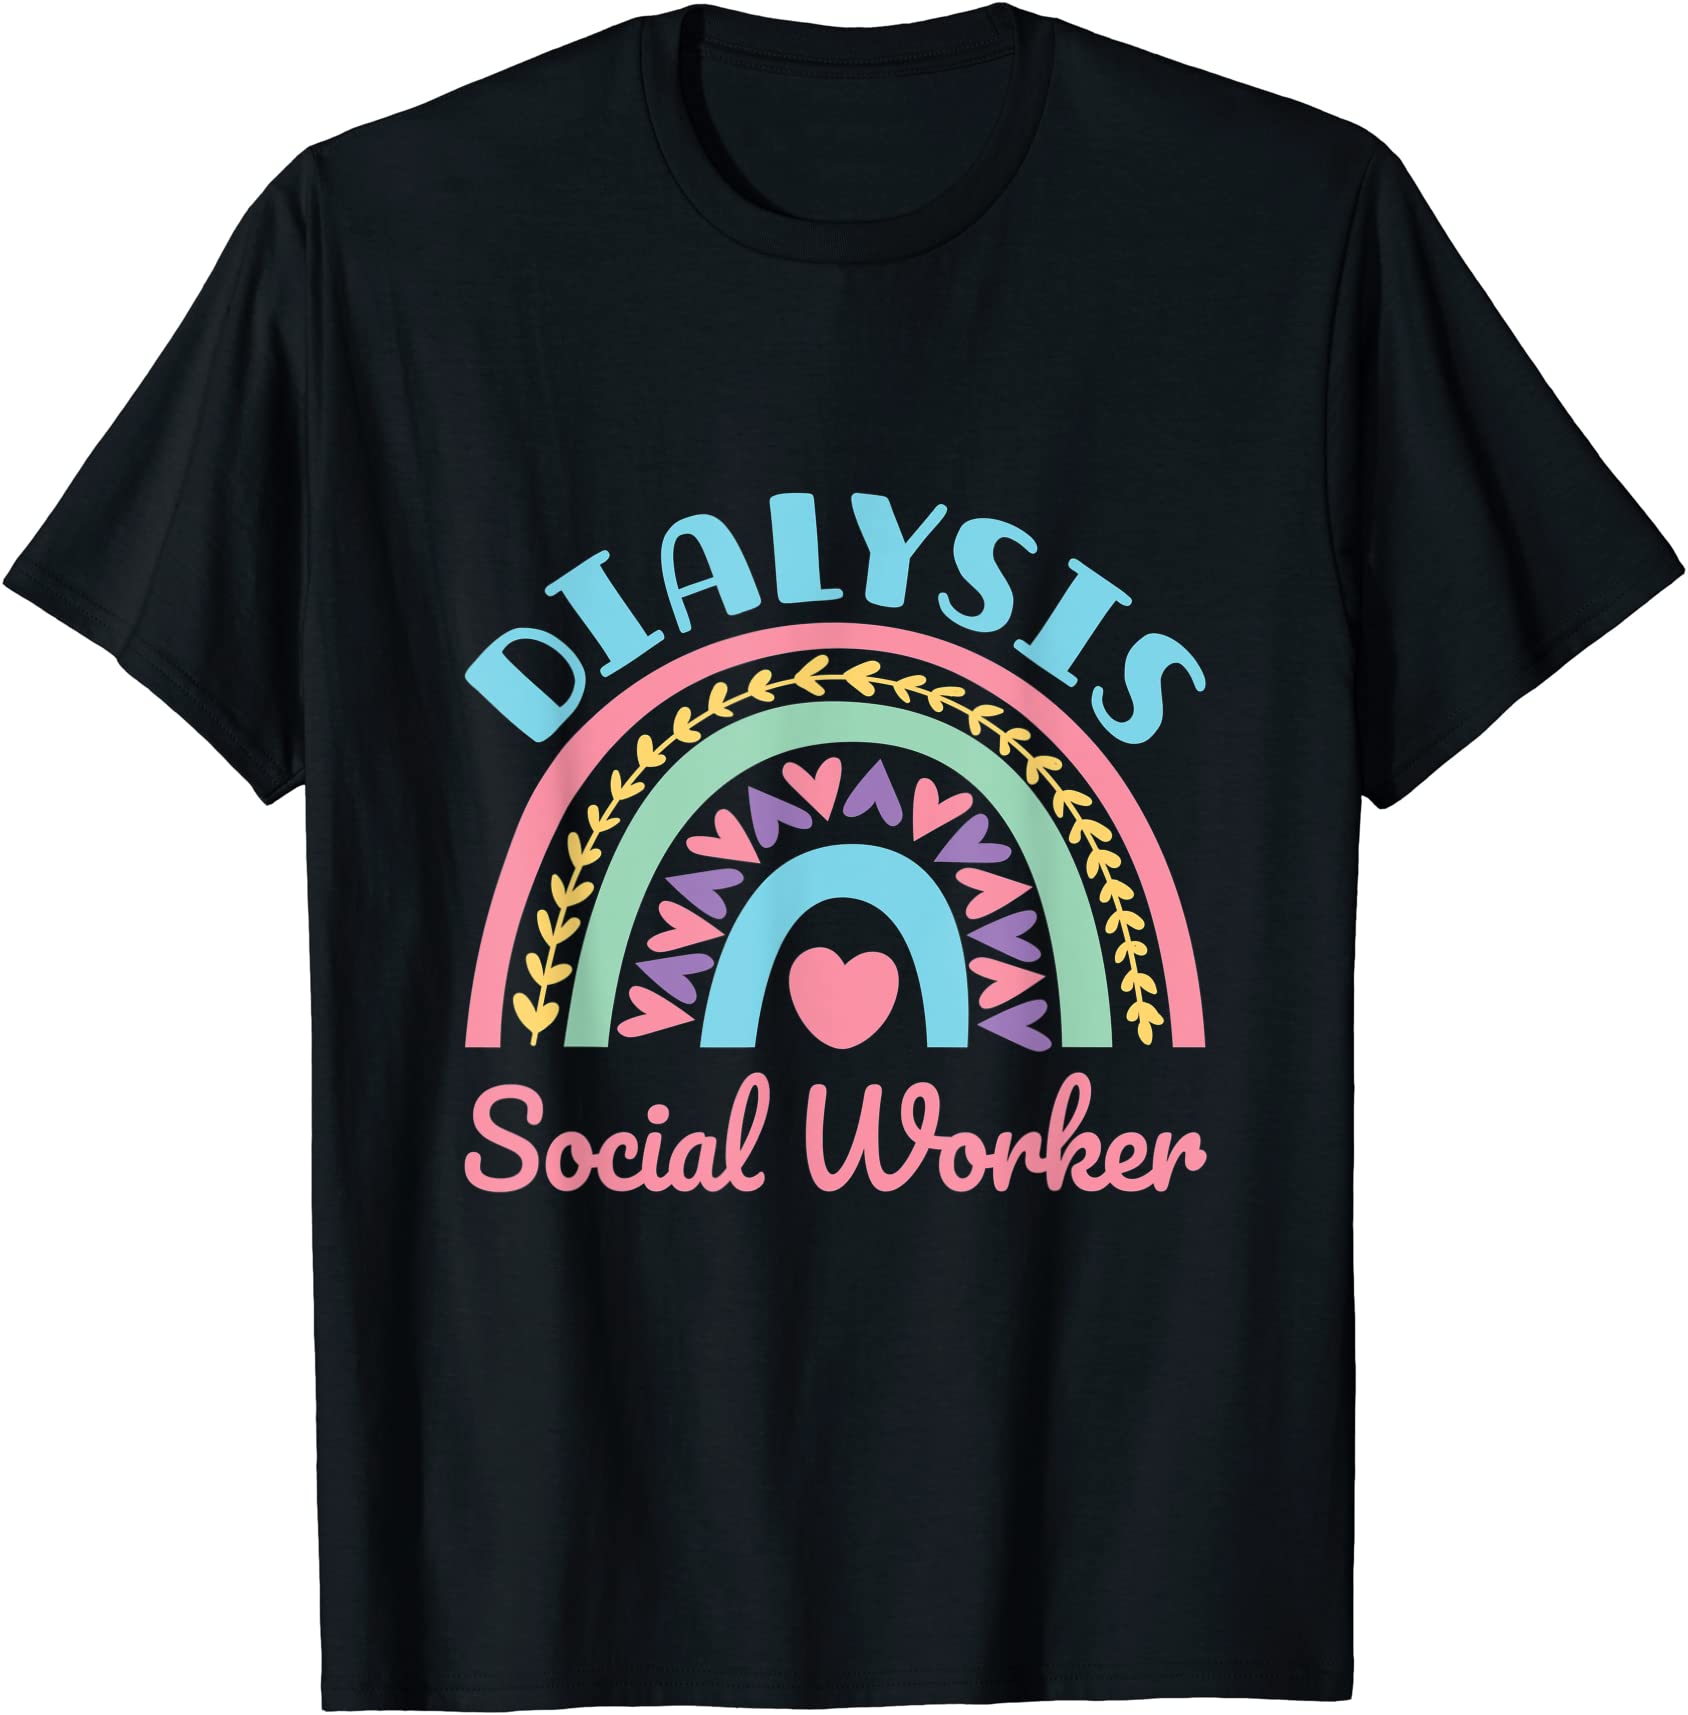 dialysis social worker renal lcsw rainbow women t shirt men - Buy t ...